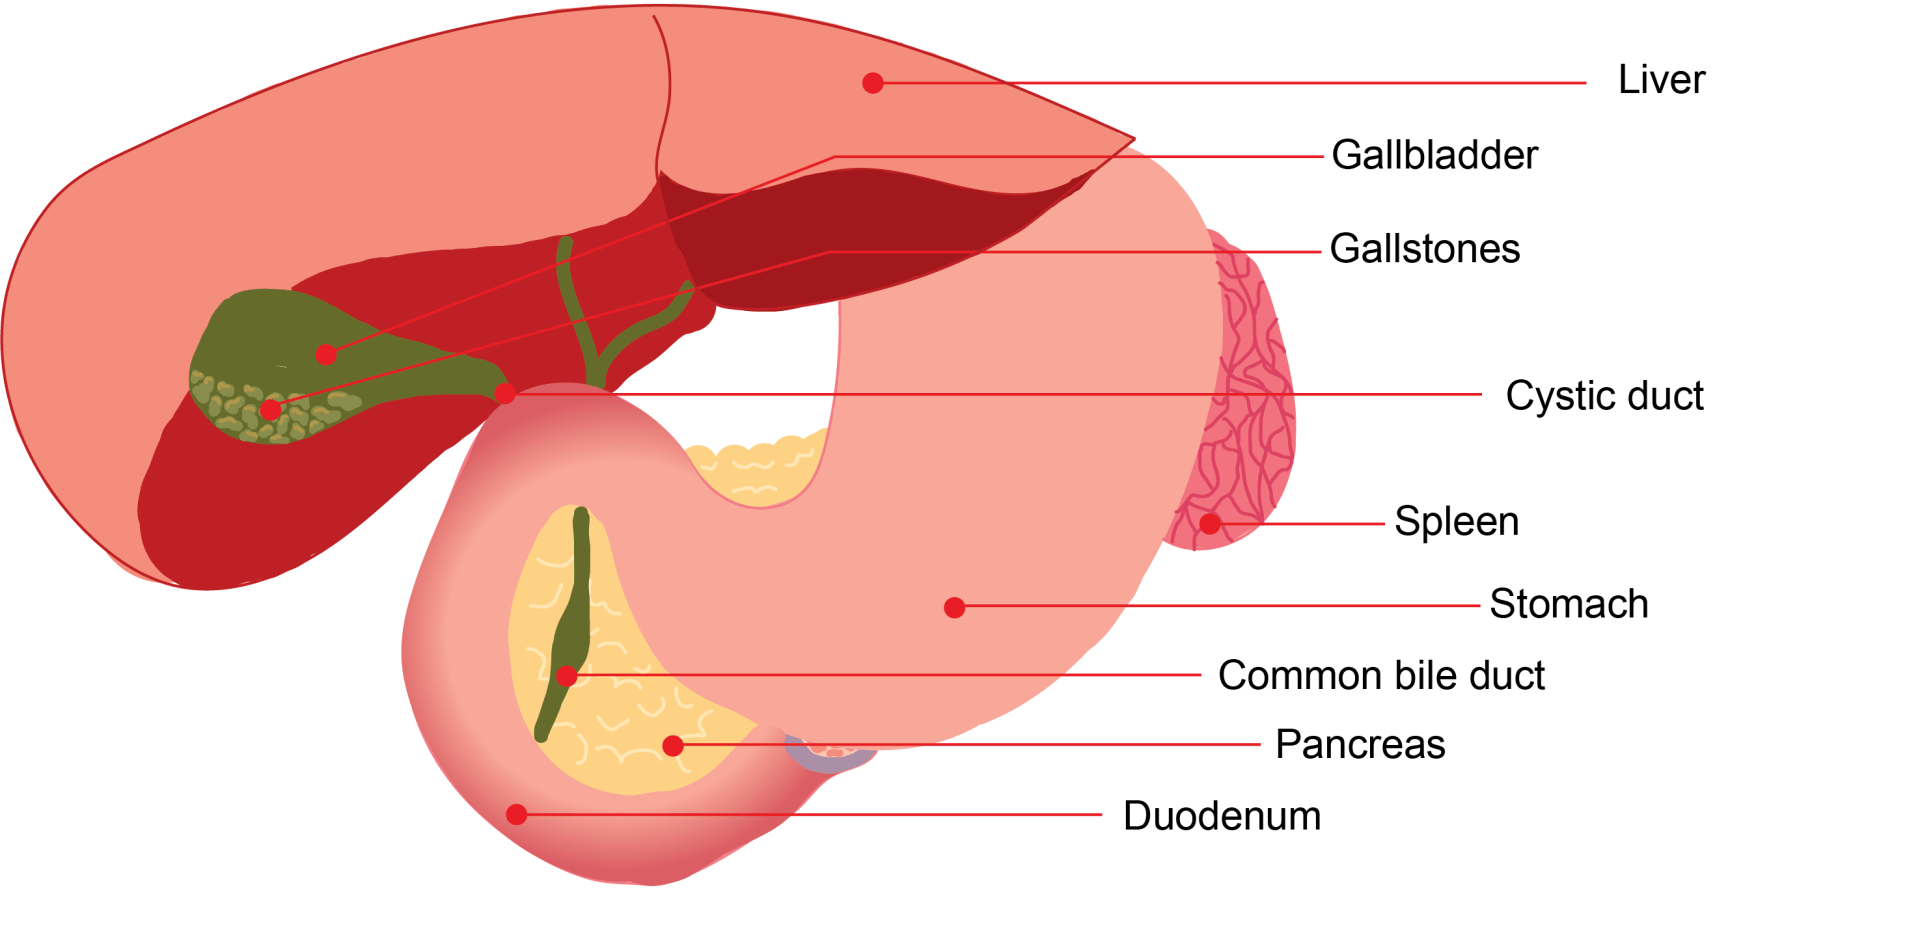 Gallbladder Anatomy